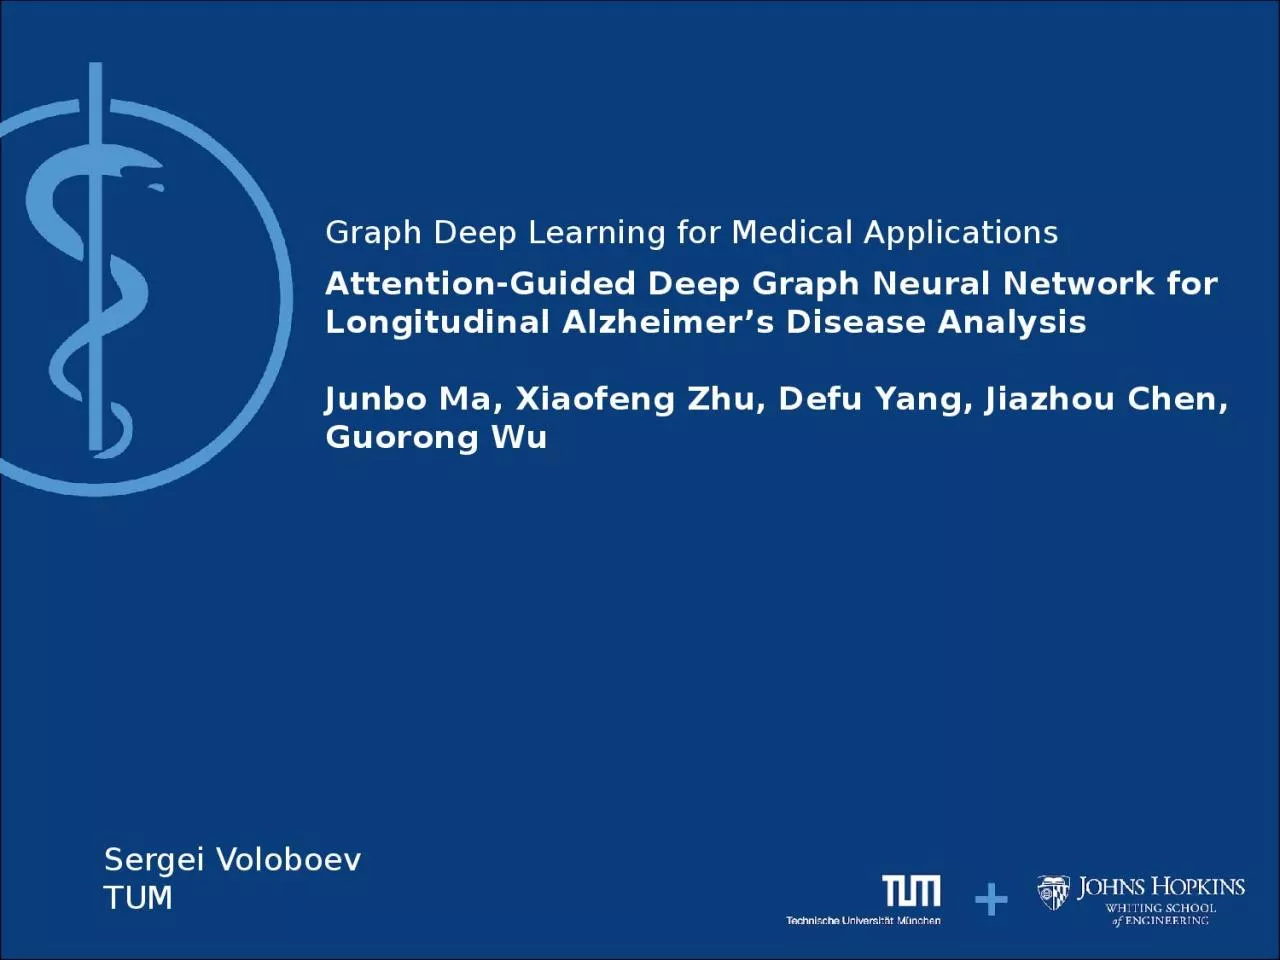 Attention-Guided Deep Graph Neural Network for Longitudinal Alzheimer’s Disease Analysis